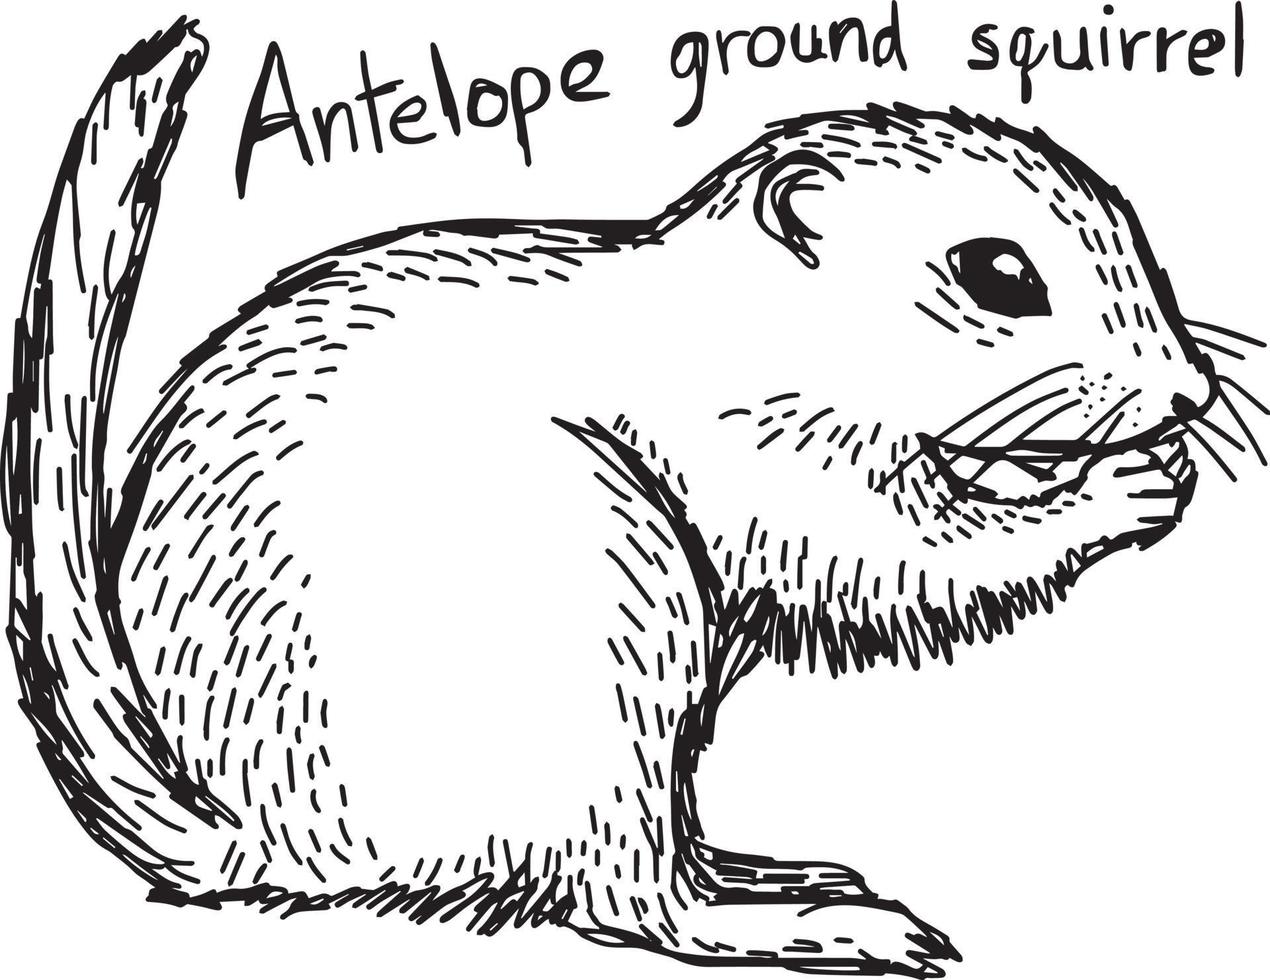 Antelope ground squirrel - vector illustration sketch